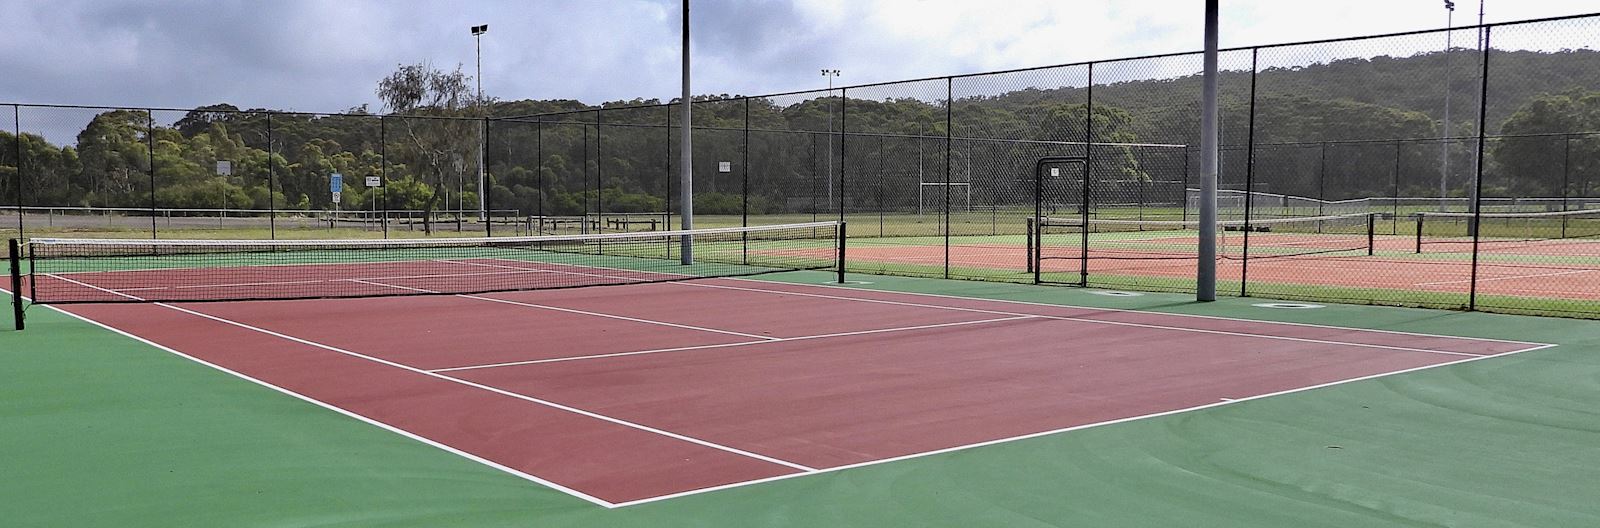 ClubSpark / Tilligerry Tennis Club / TILLIGERRY TENNIS CLUB, MALLABULA |  Tennis Australia